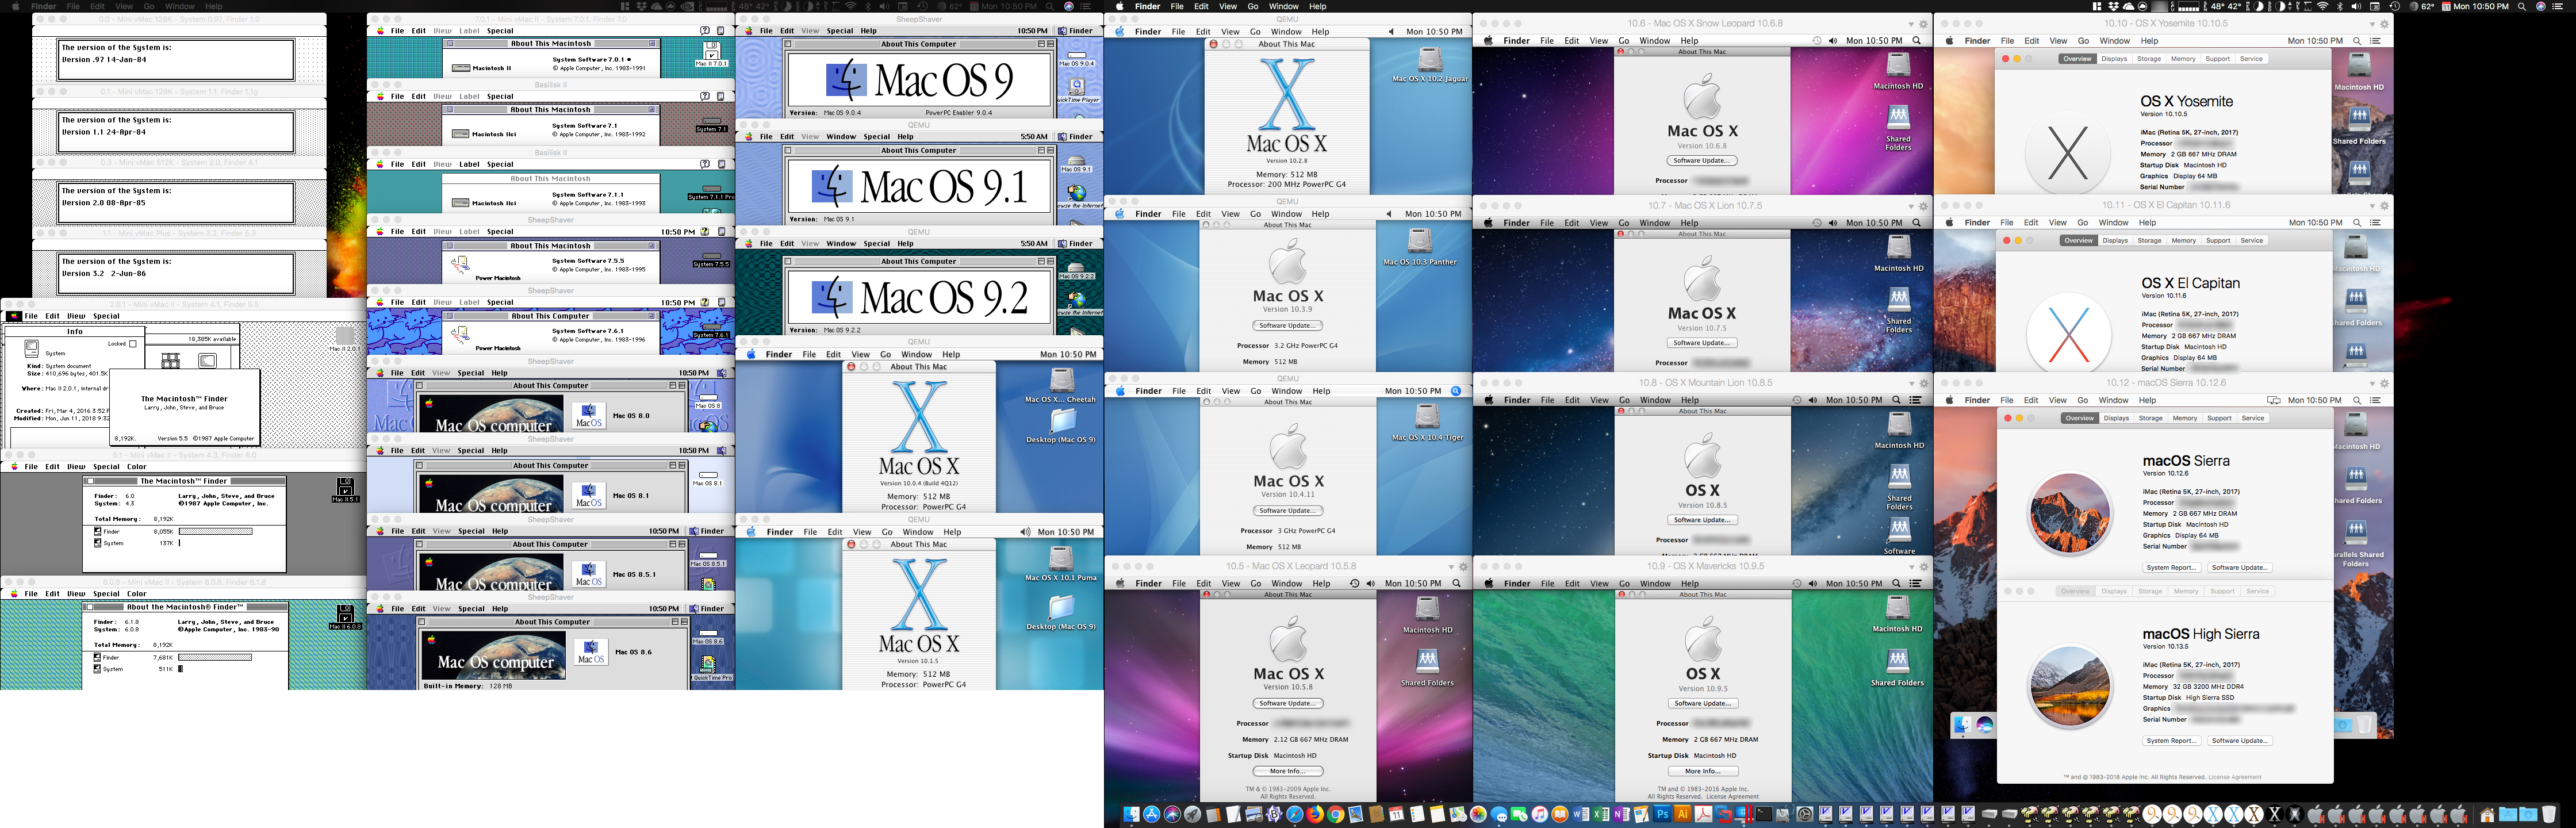 emulator mac 10.6